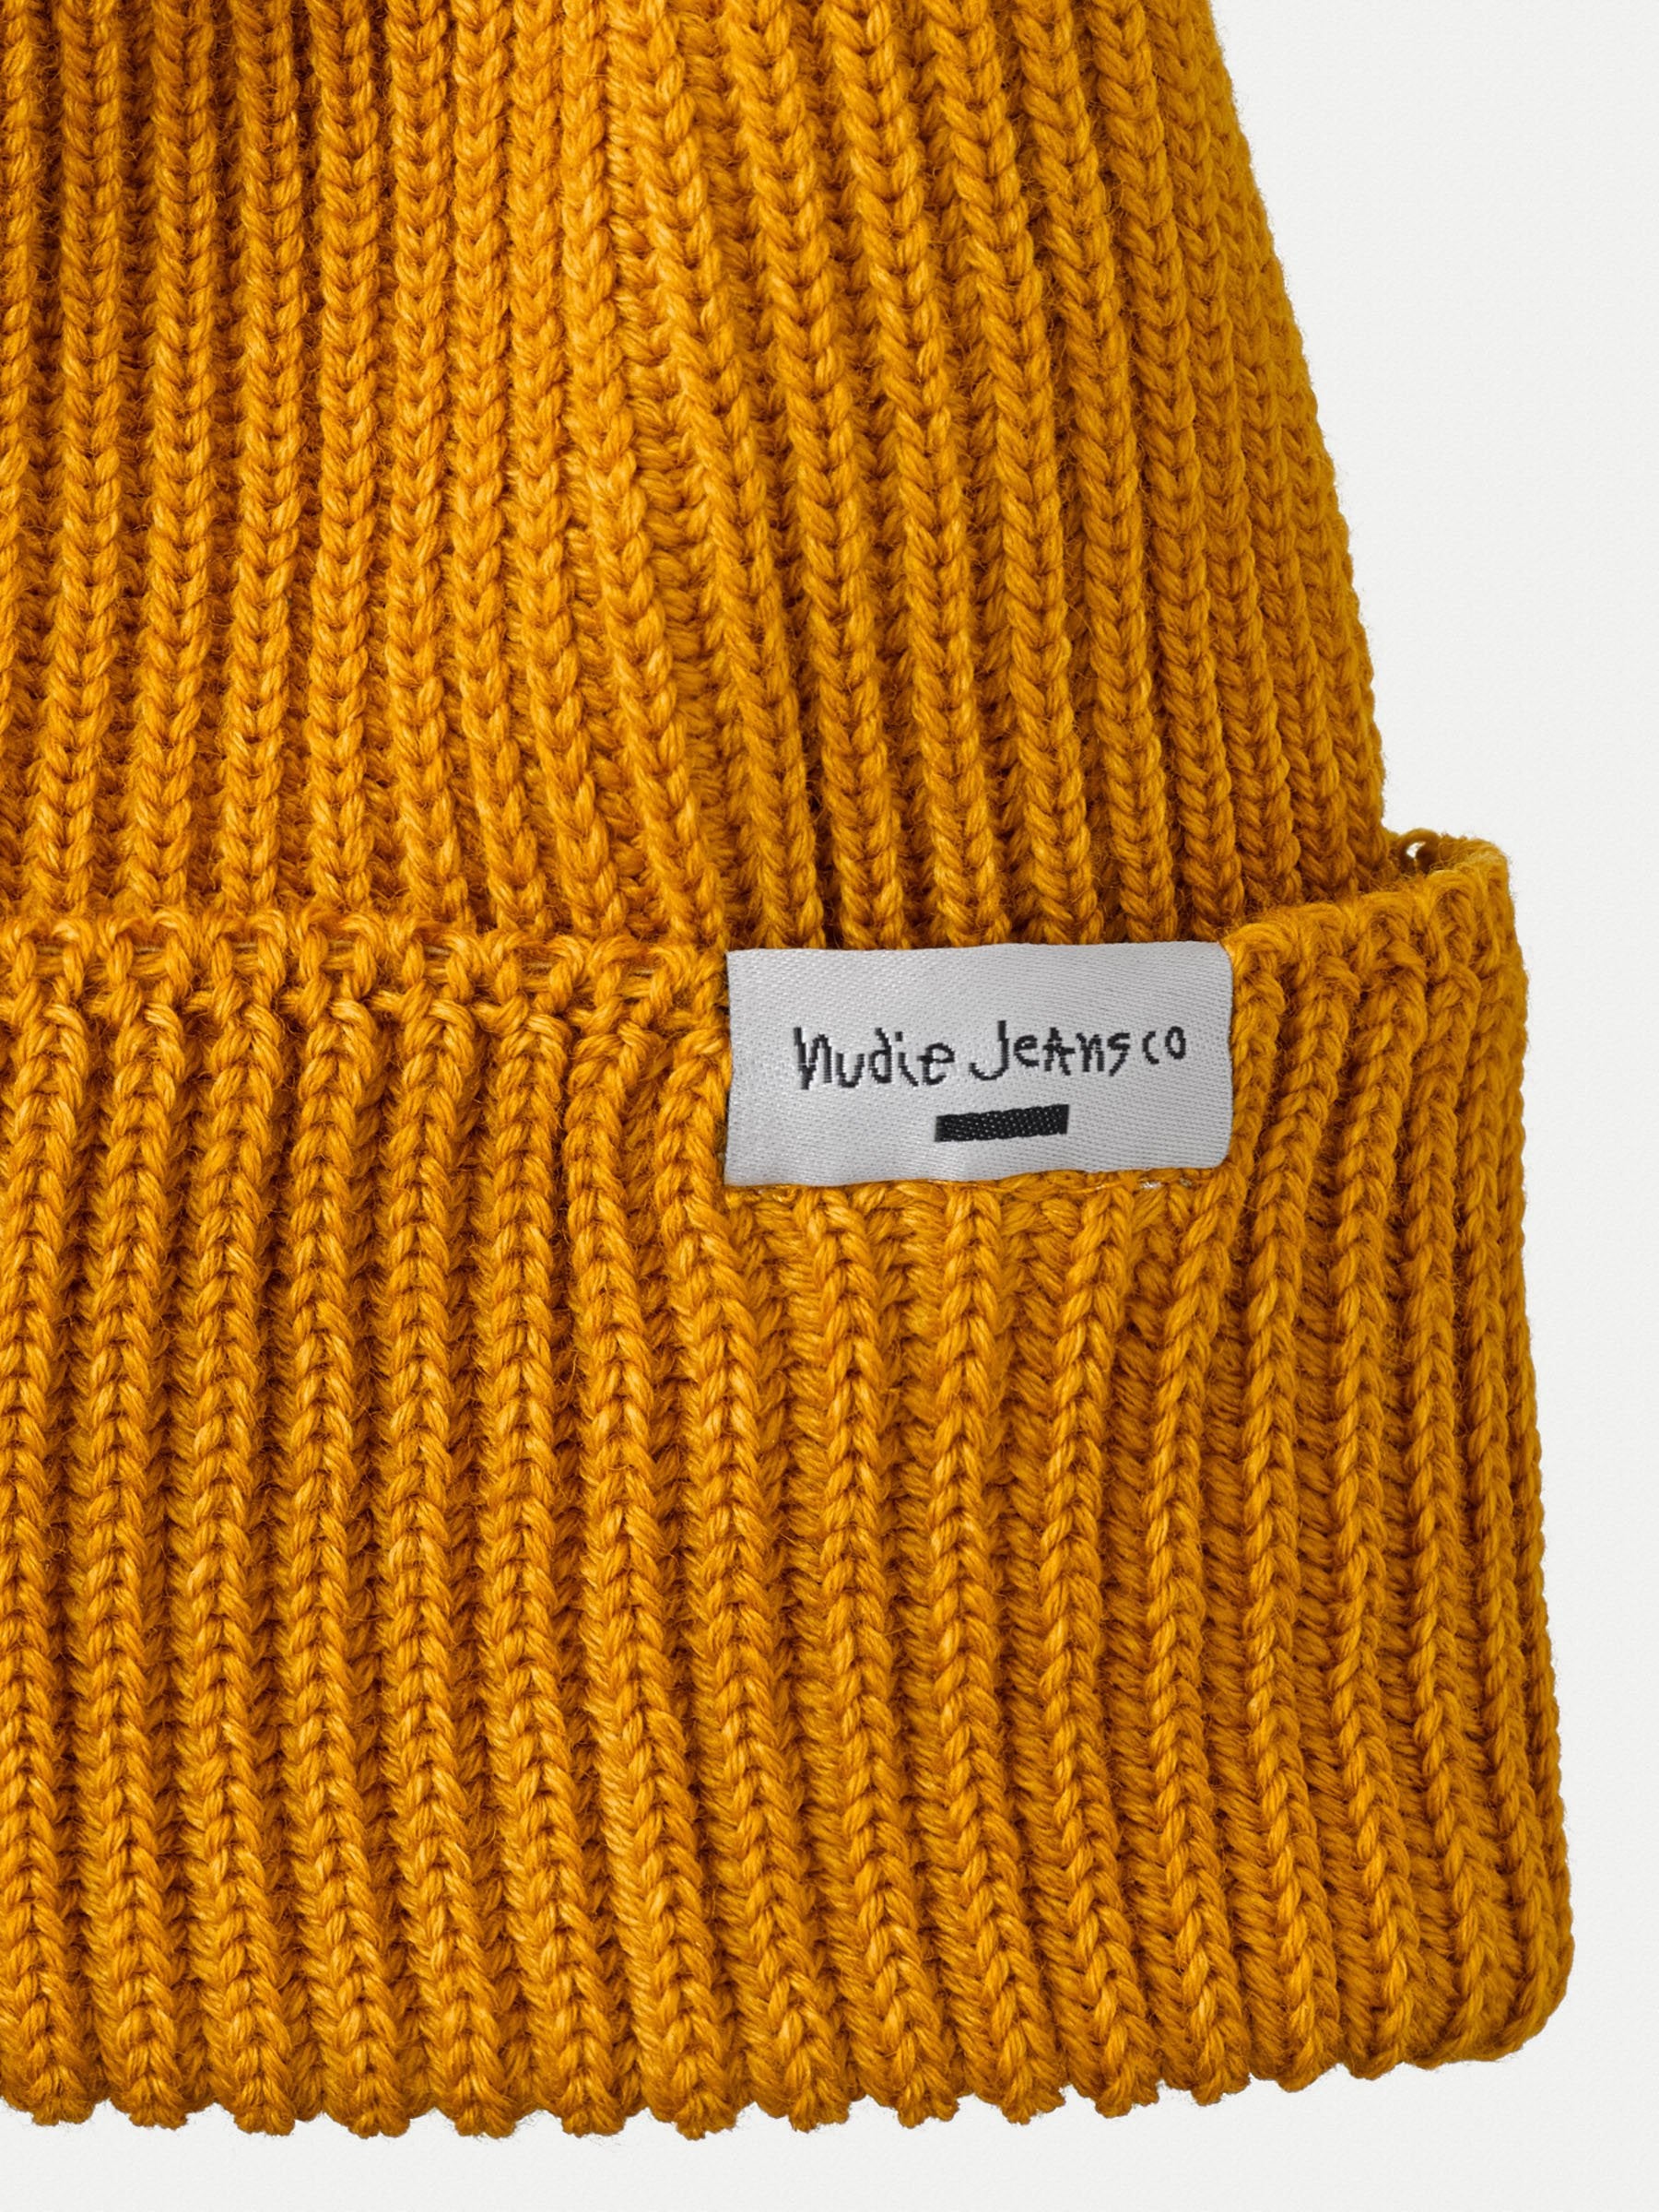 Nudie - 100% Wool Tysson Beanie - Ochre